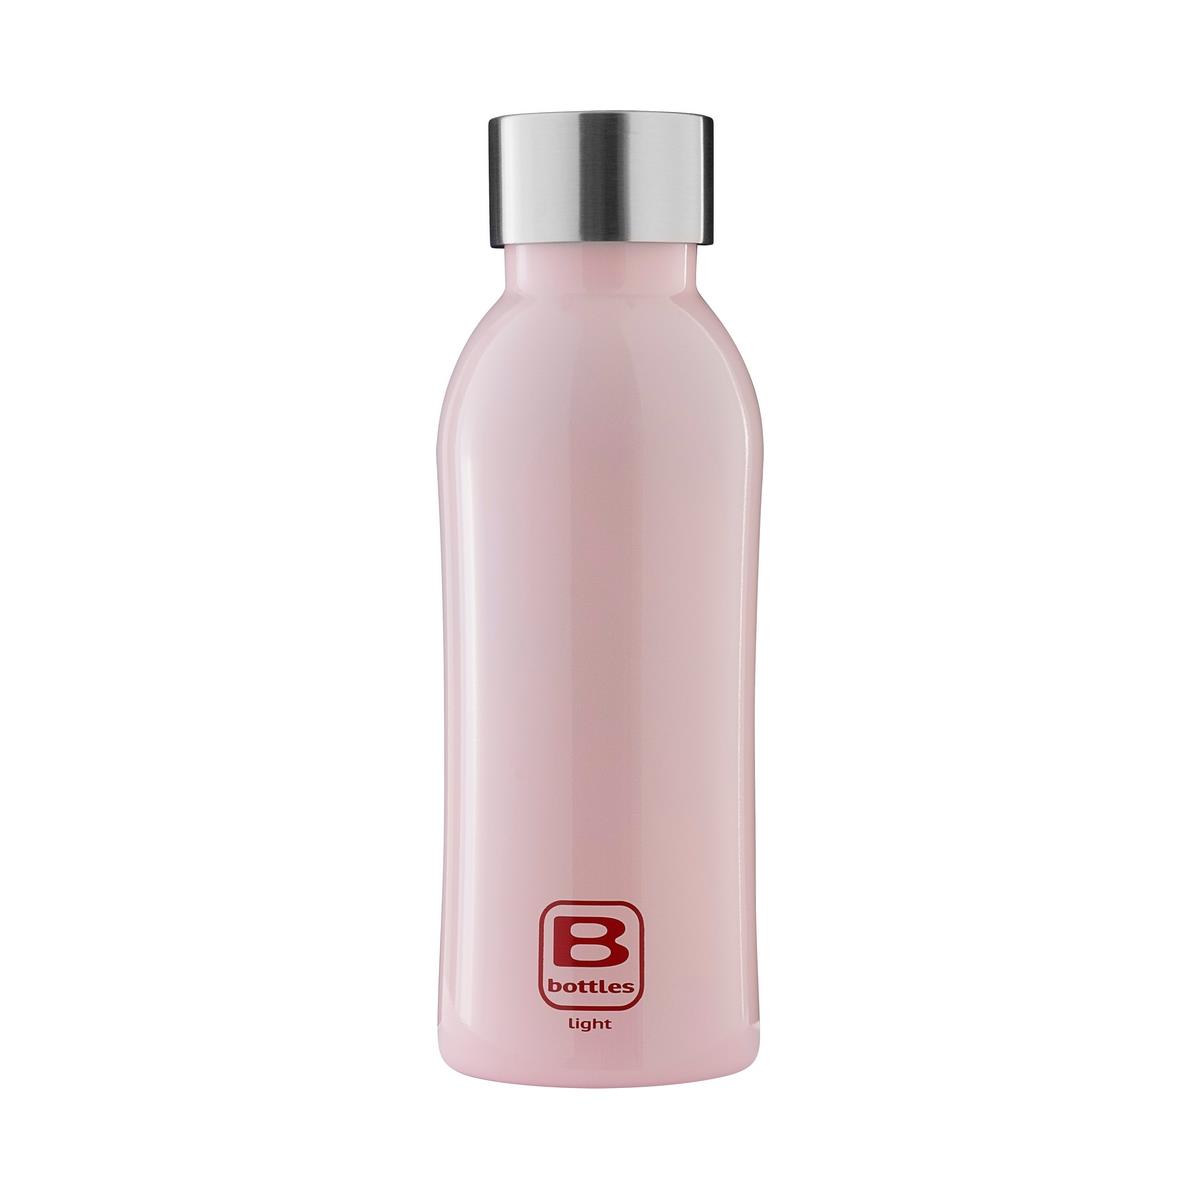 photo B Bottles Light - Pink - 530 ml - Bottiglia in acciaio inox 18/10 ultra leggera e compatta